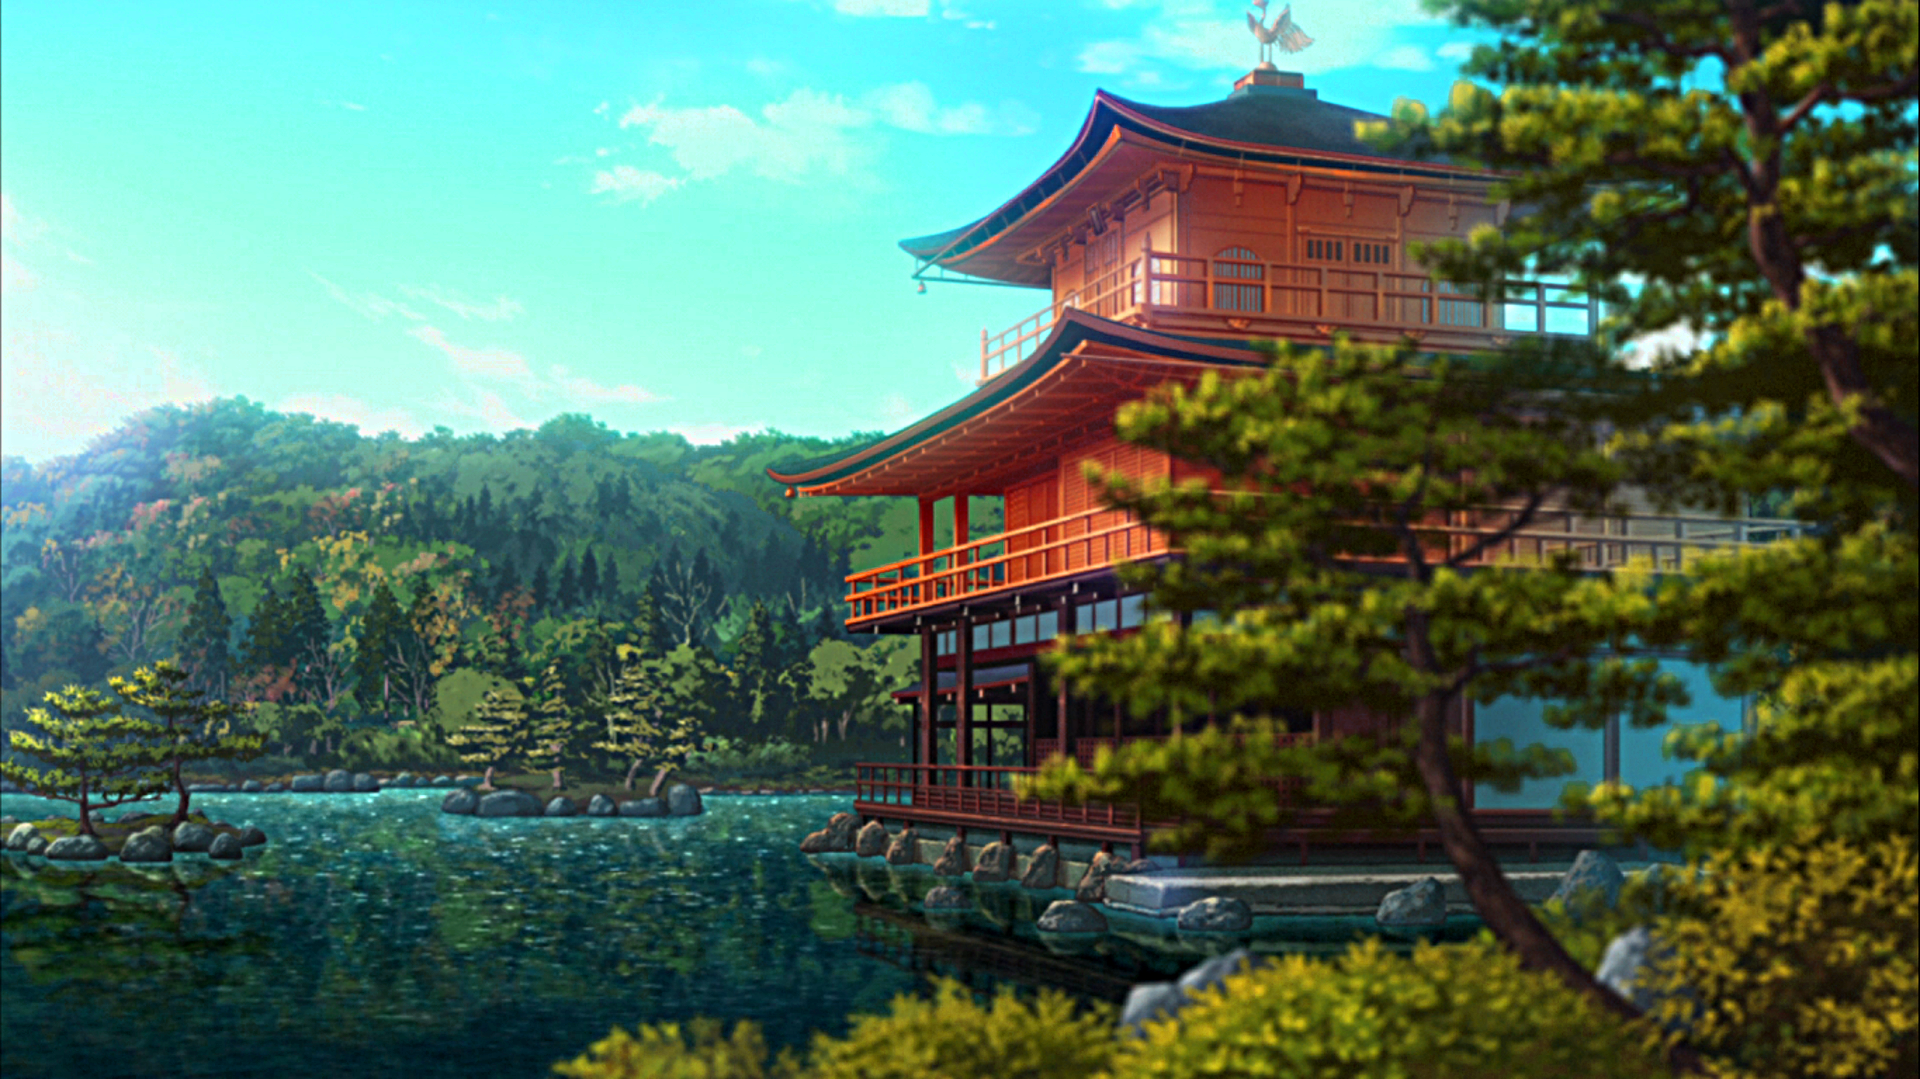 Anime Citrus HD Wallpaper | Background Image